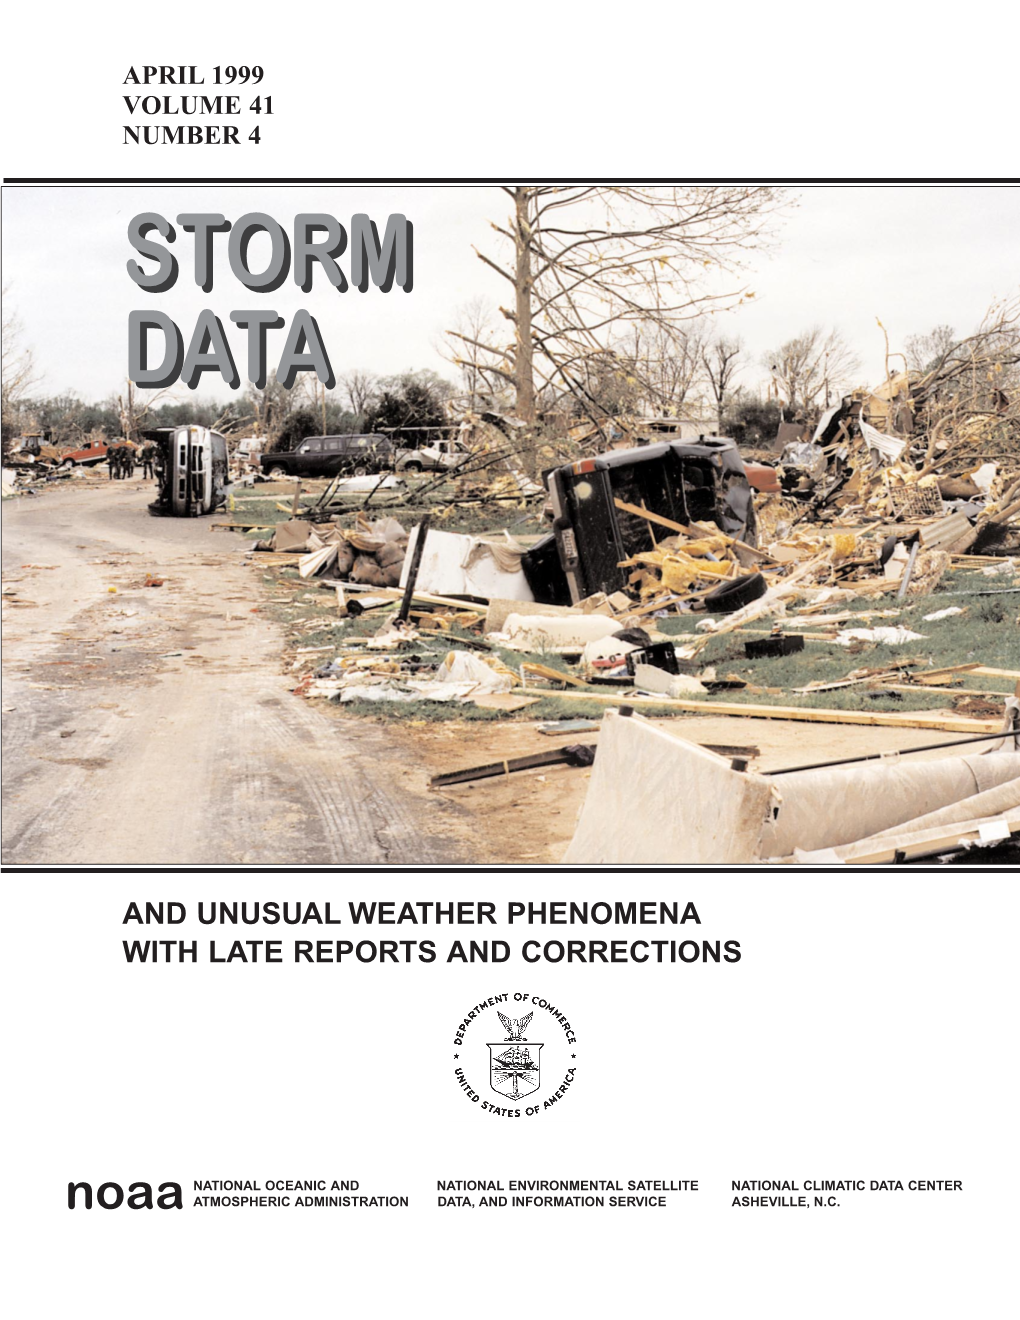 Storm Data Storm Data